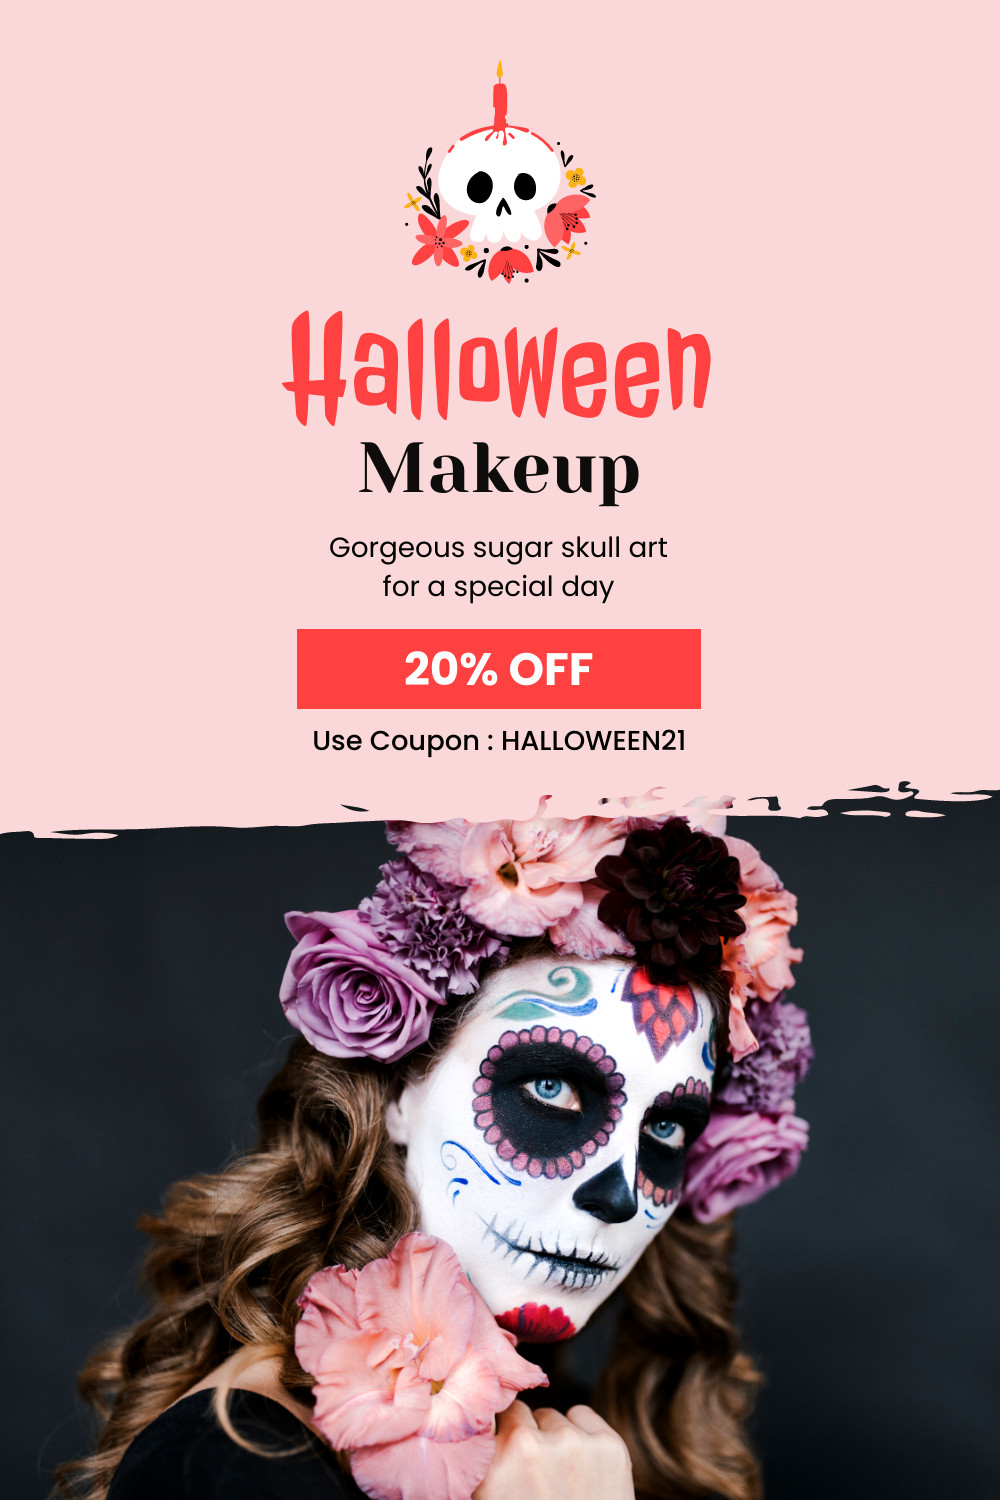 Sugar Skull Halloween Makeup Discount Facebook Cover 820x360